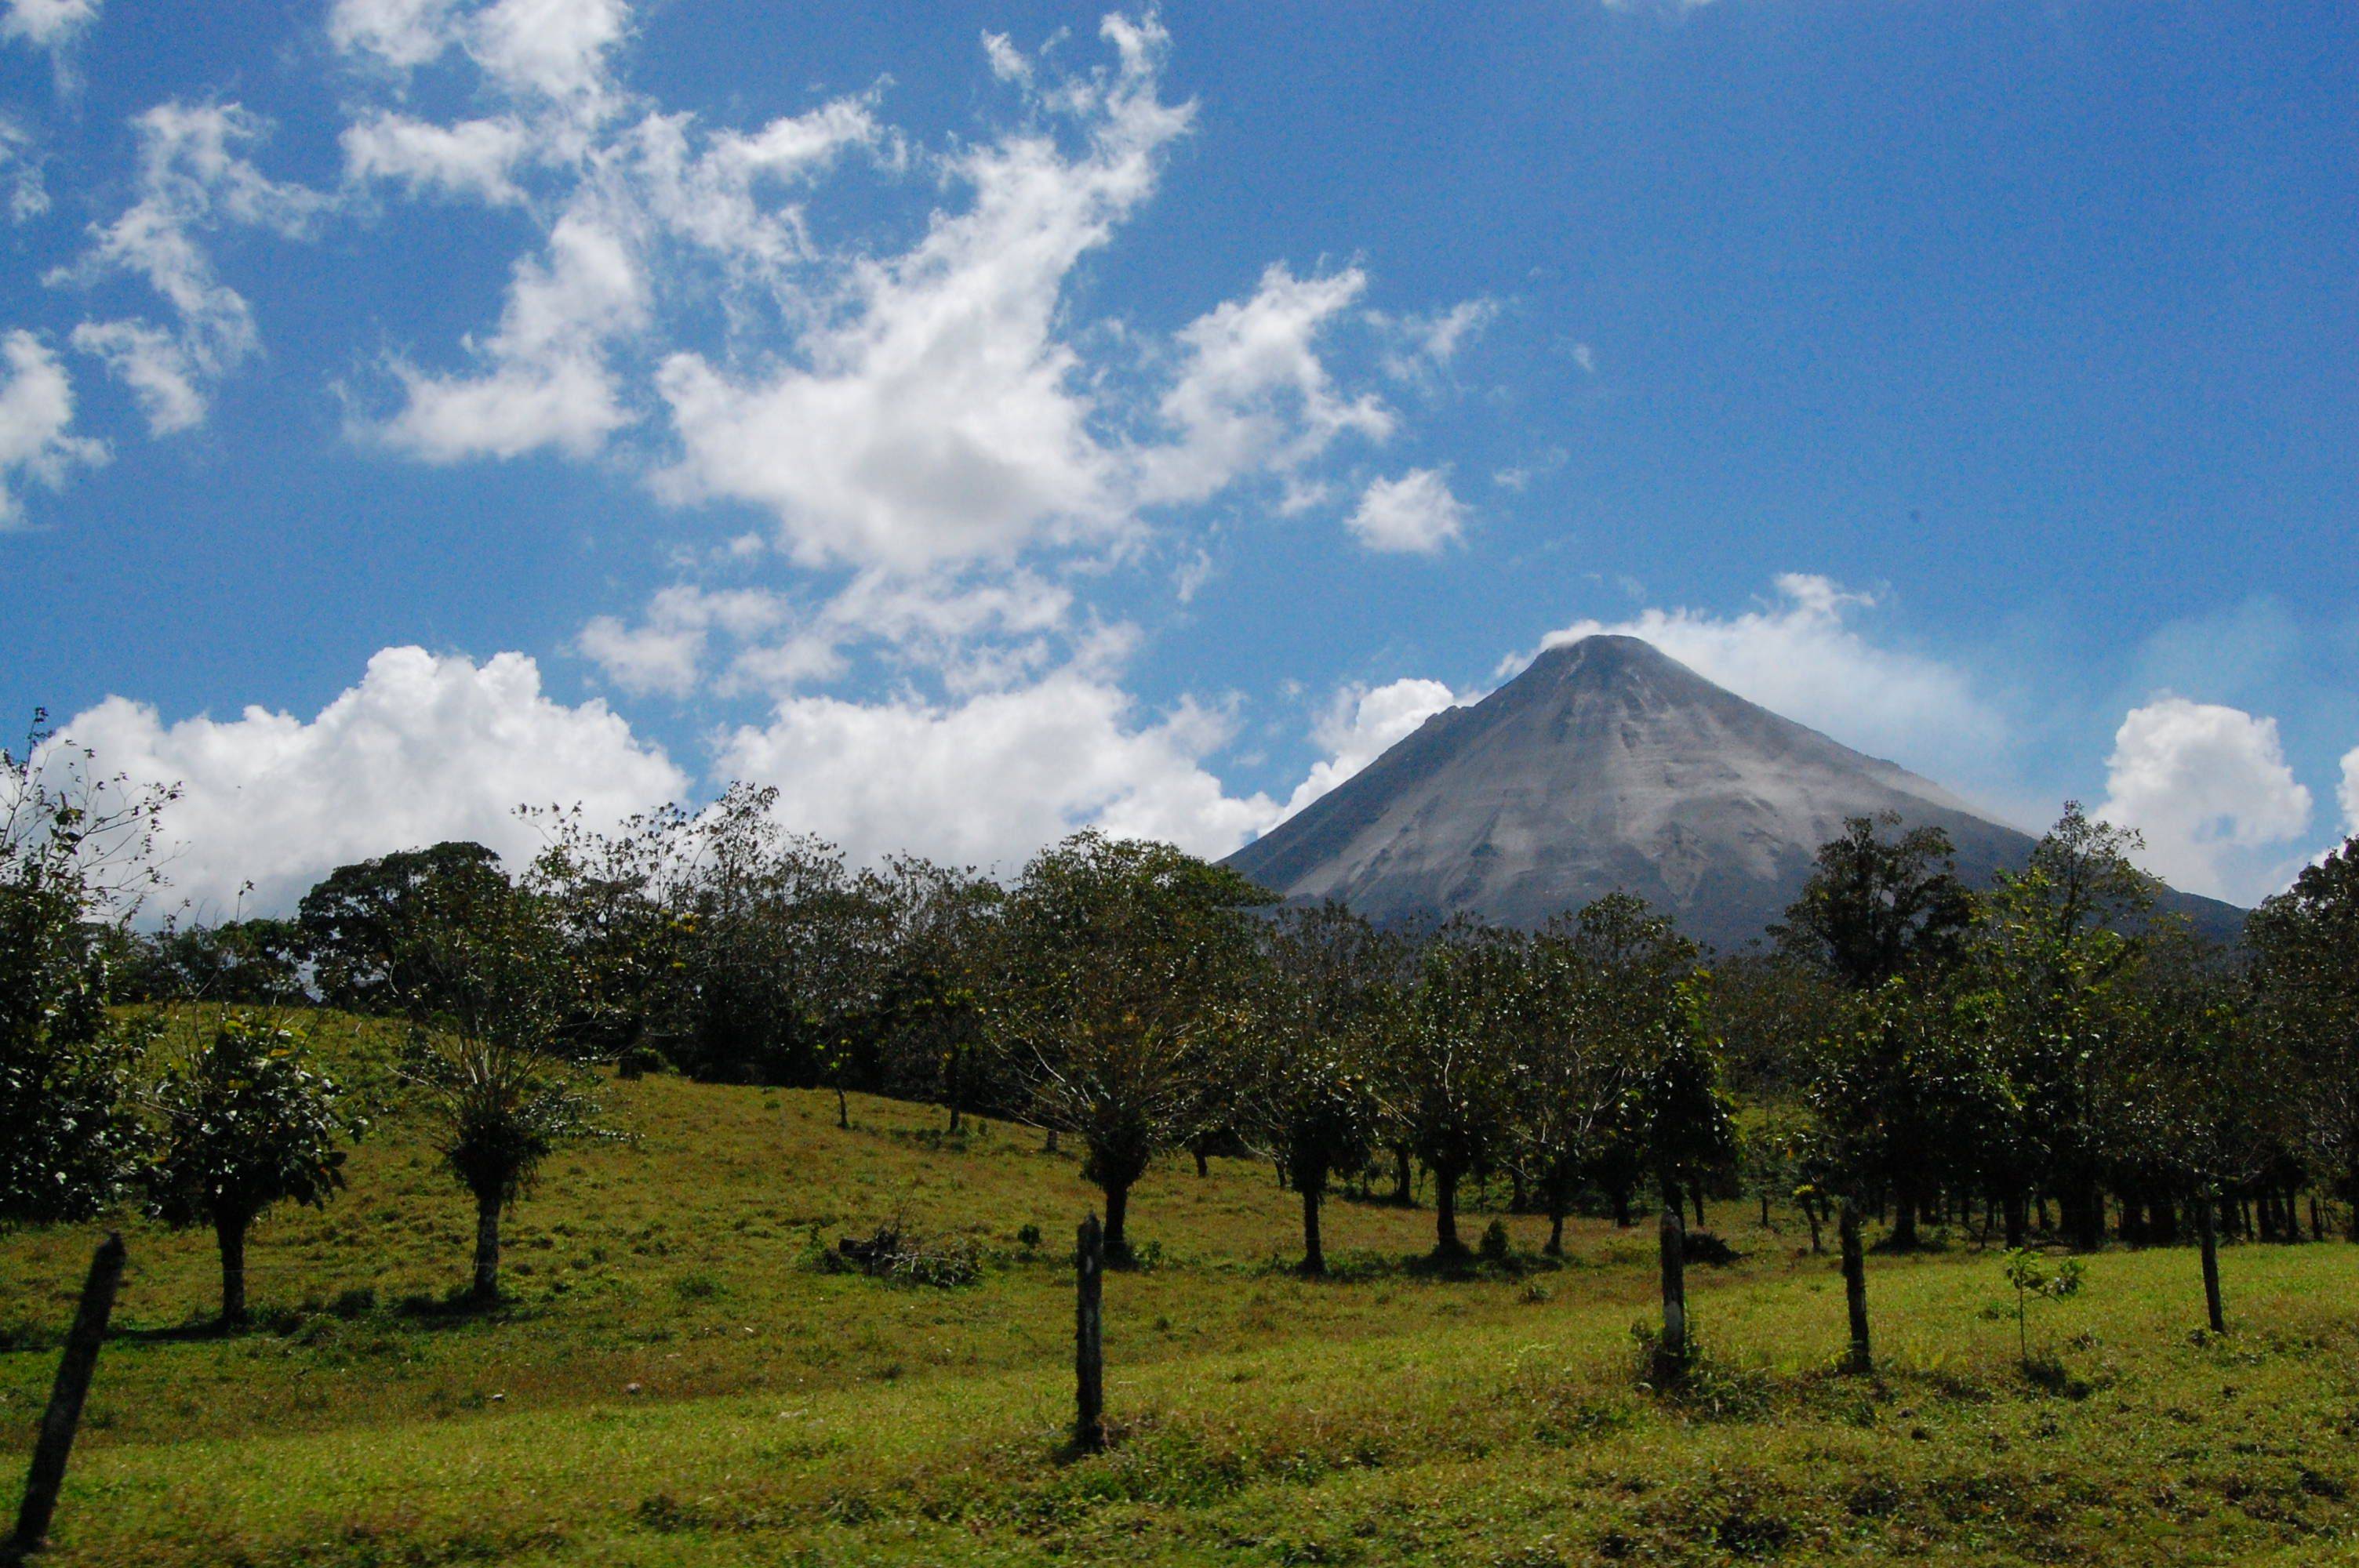 Le volcan Arenal, véritable colosse